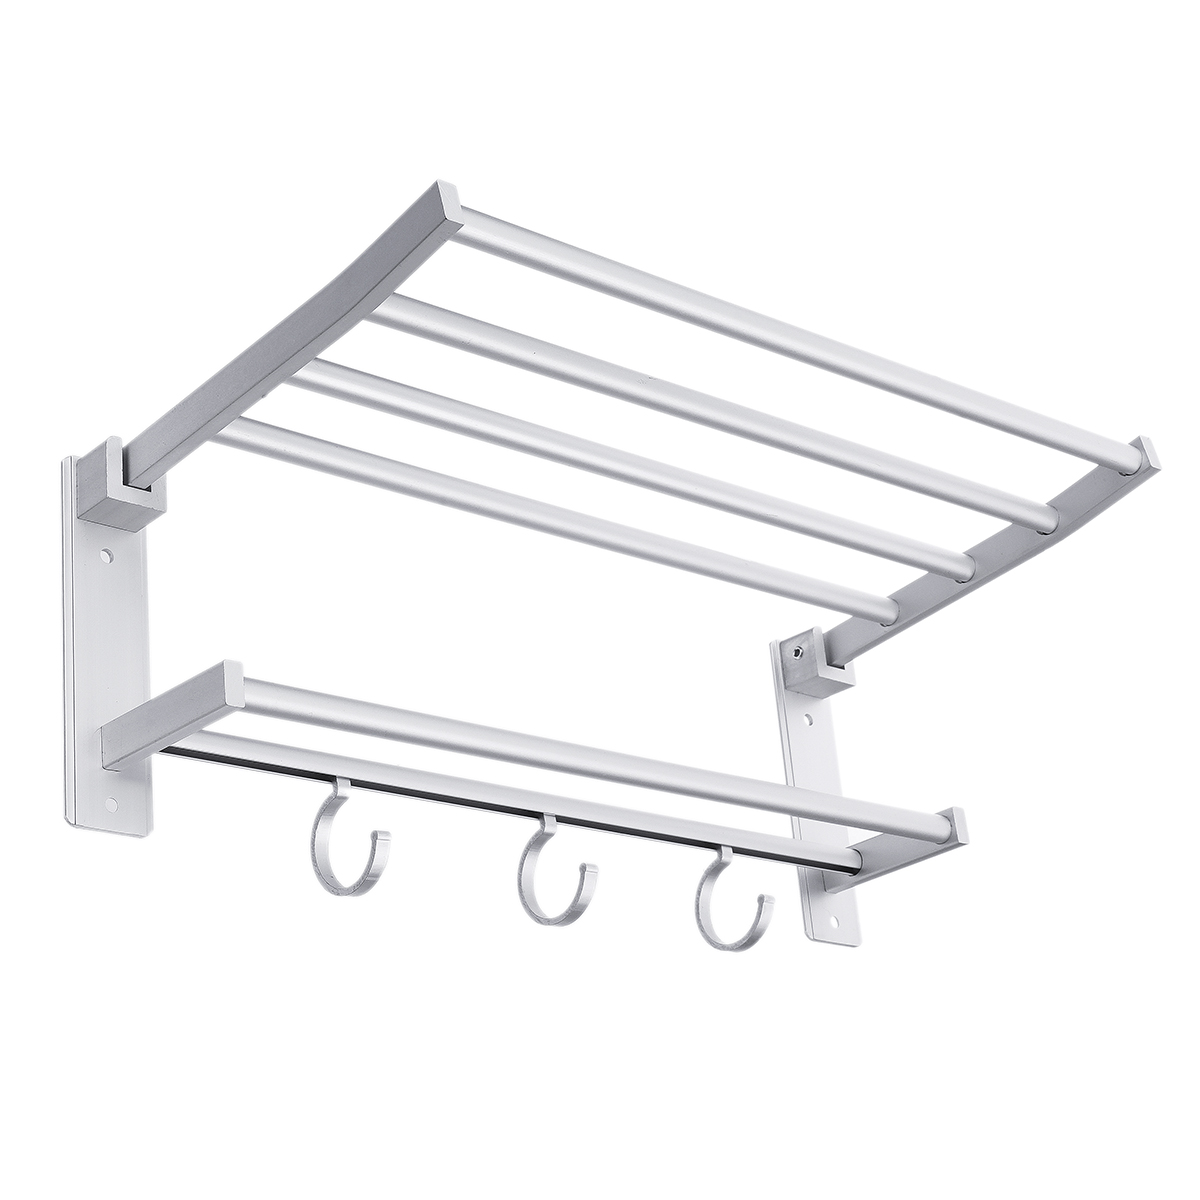 Towel-Holder-Aluminum-Bath-Kitchen-Hanger-Set-Holder-Bar-Rail-Towel-Rack-1634167-6